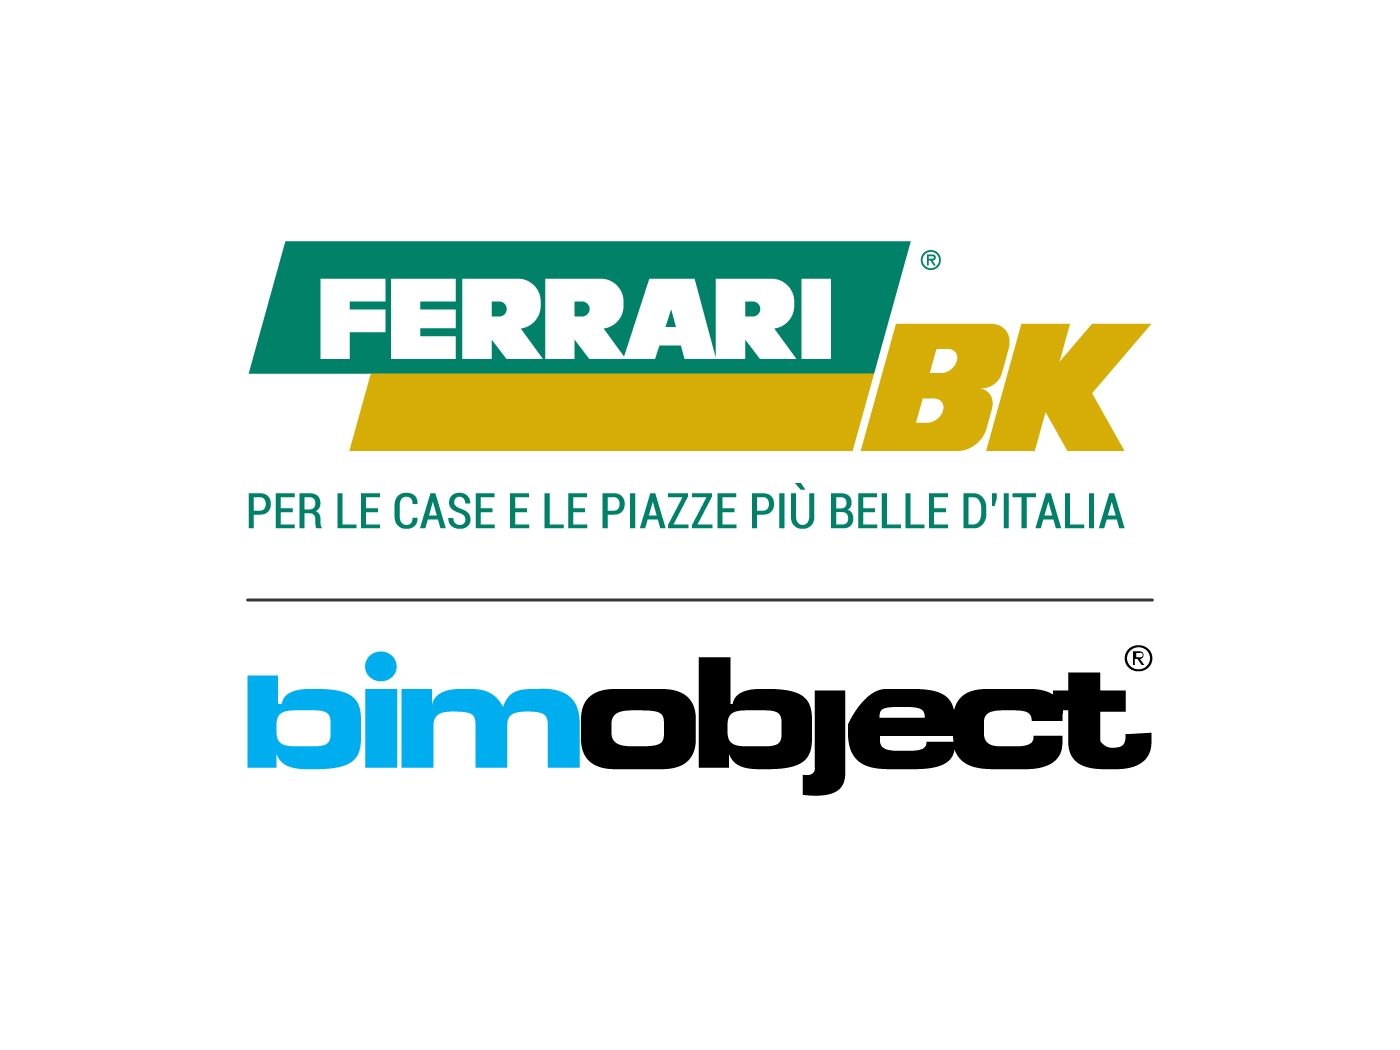 Bim Object Ferrari BK